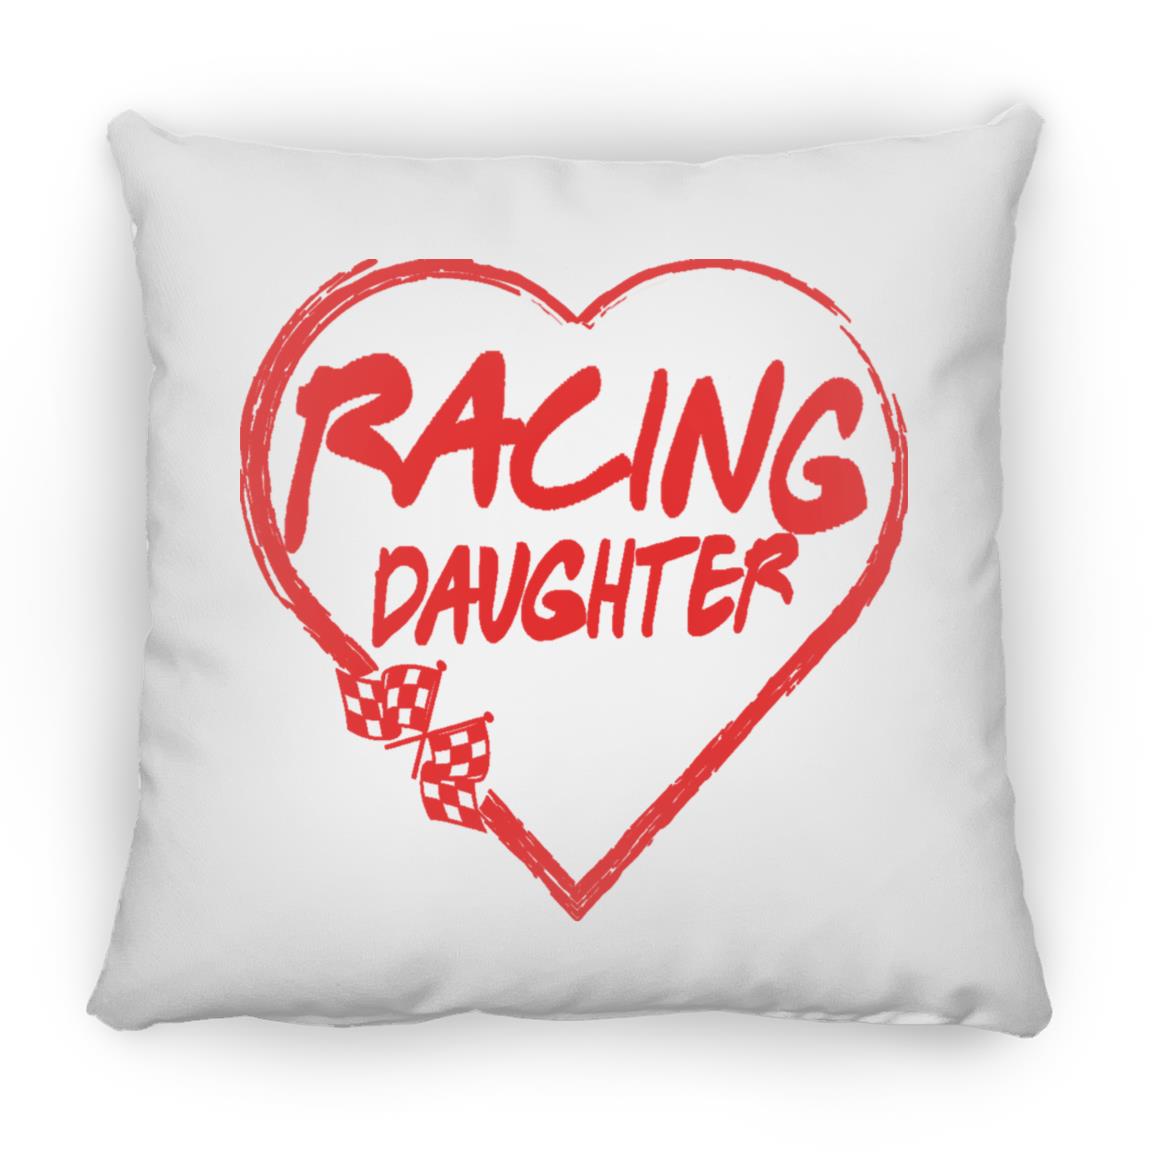 Racing Daughter Heart Large Square Pillow